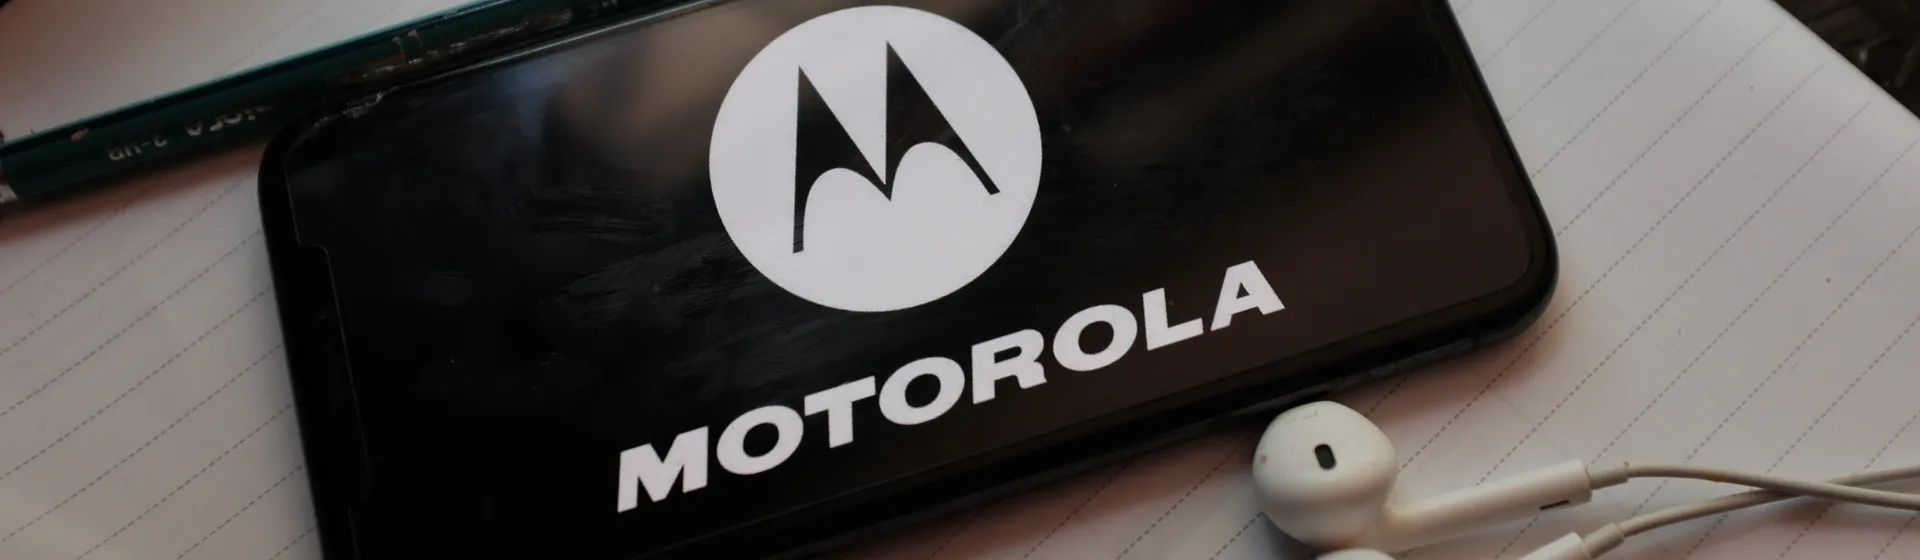 Capa do post: Celular Motorola Cyber Monday: confira nossas apostas